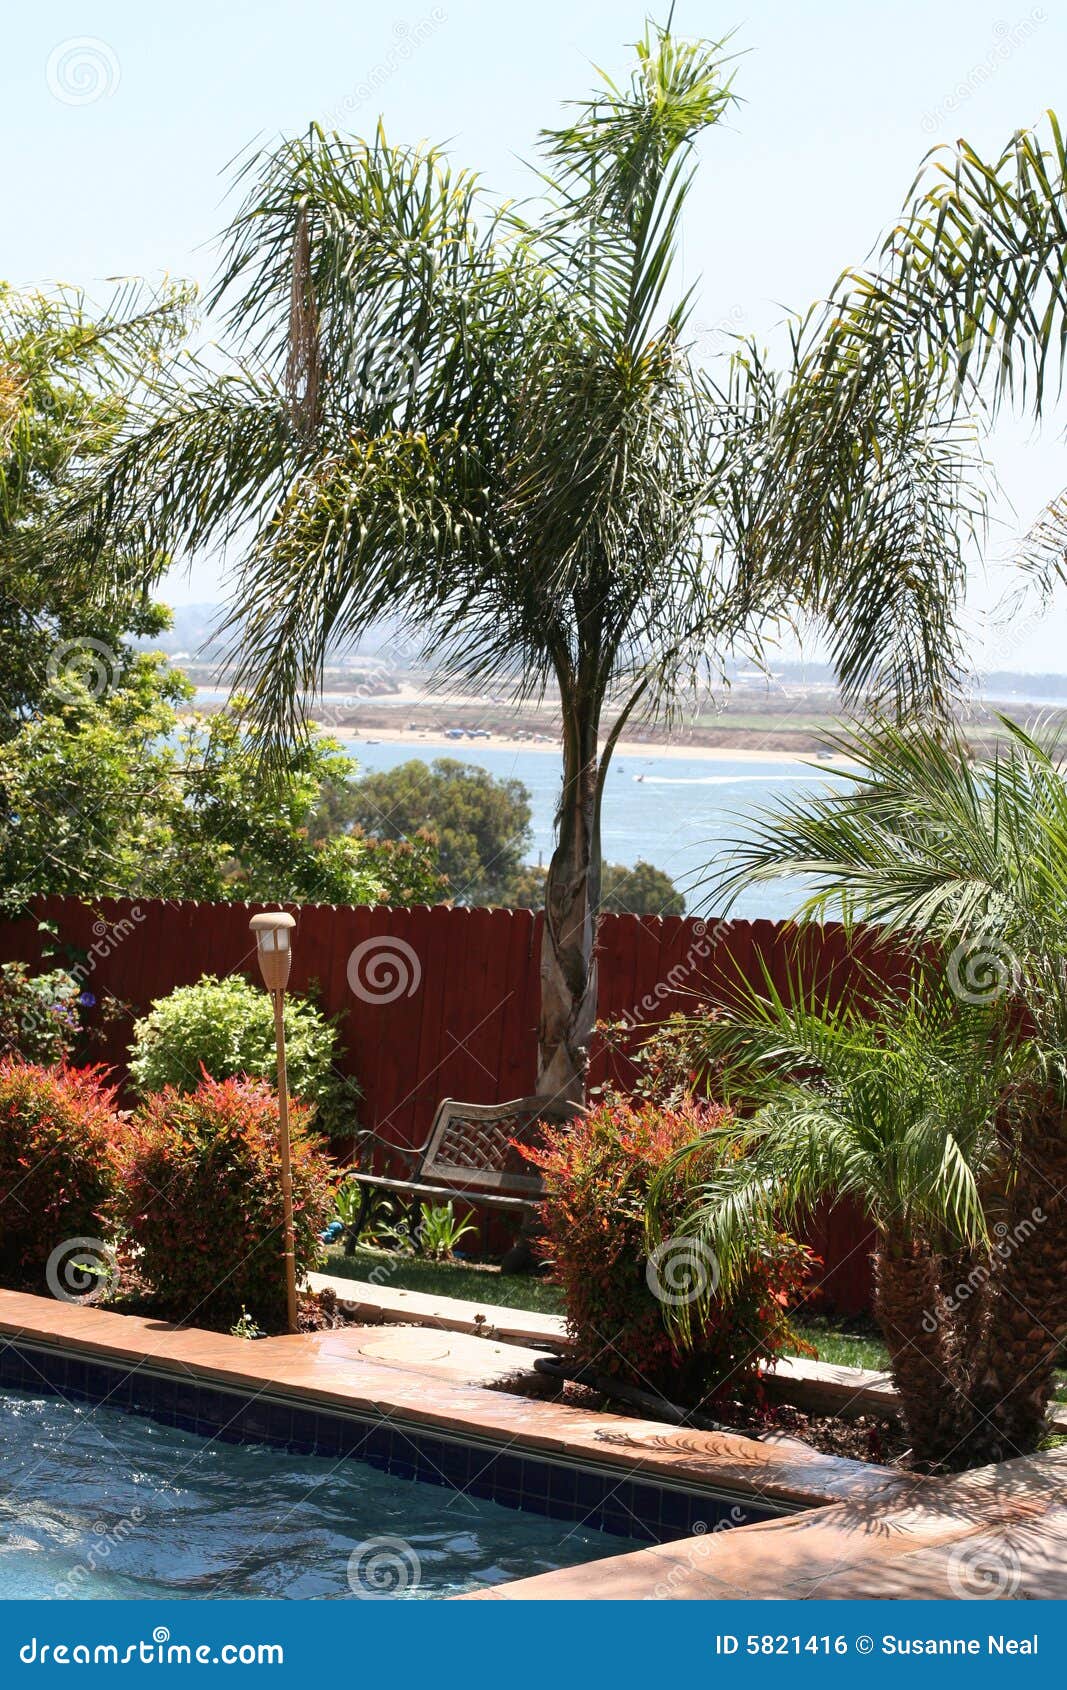 palm tree, pool, bay, backyard royalty free stock image